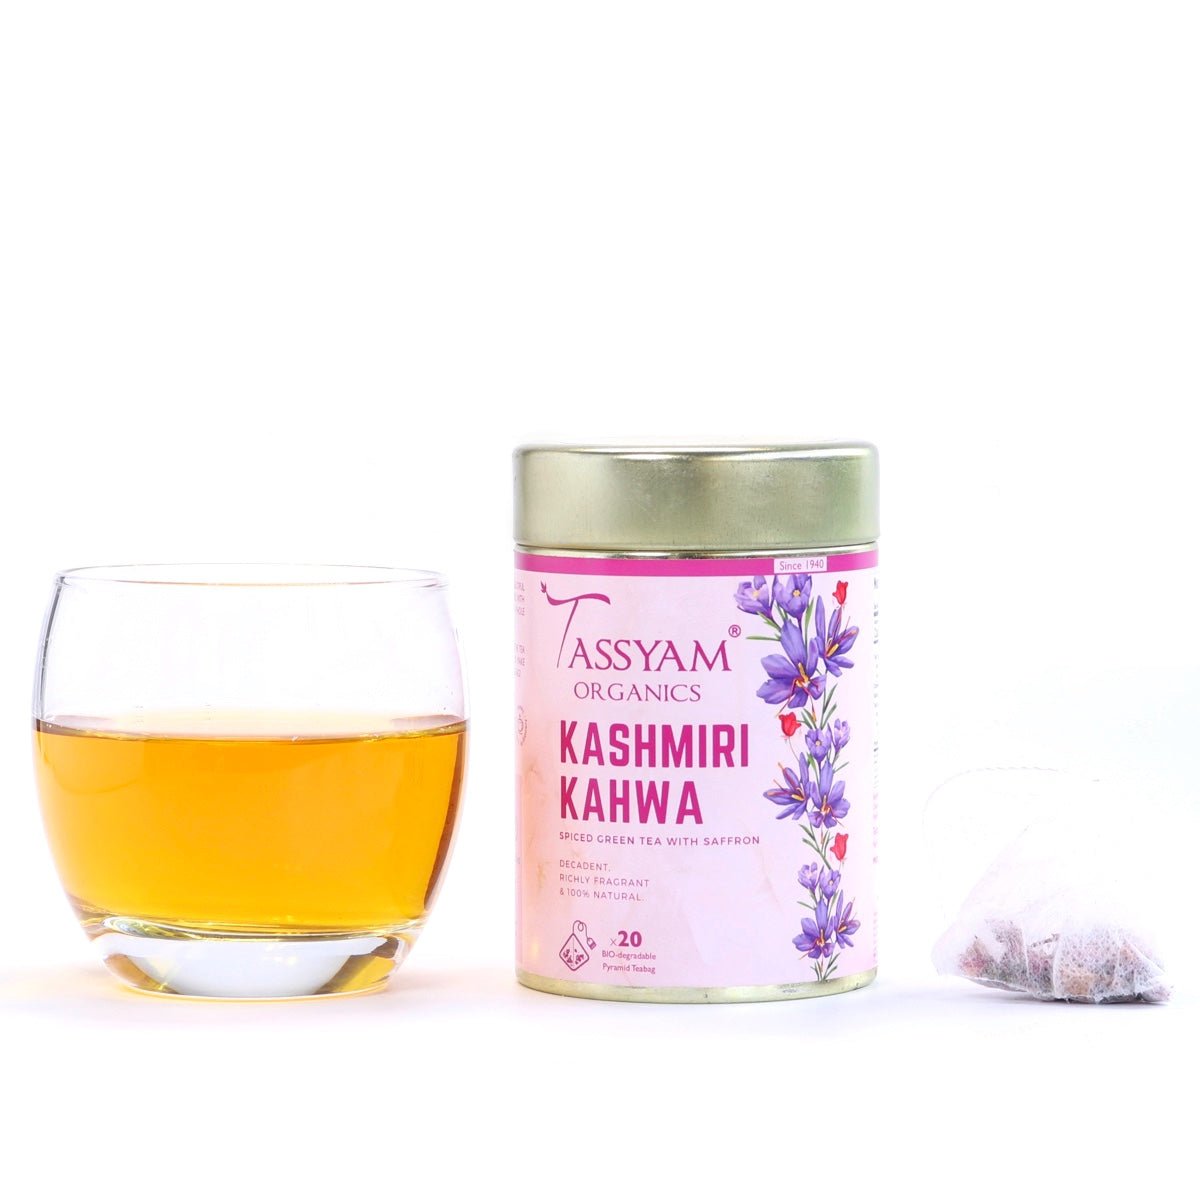 Kashmiri Kahwa 20 Biodegradable Tea Bags - Tassyam Organics